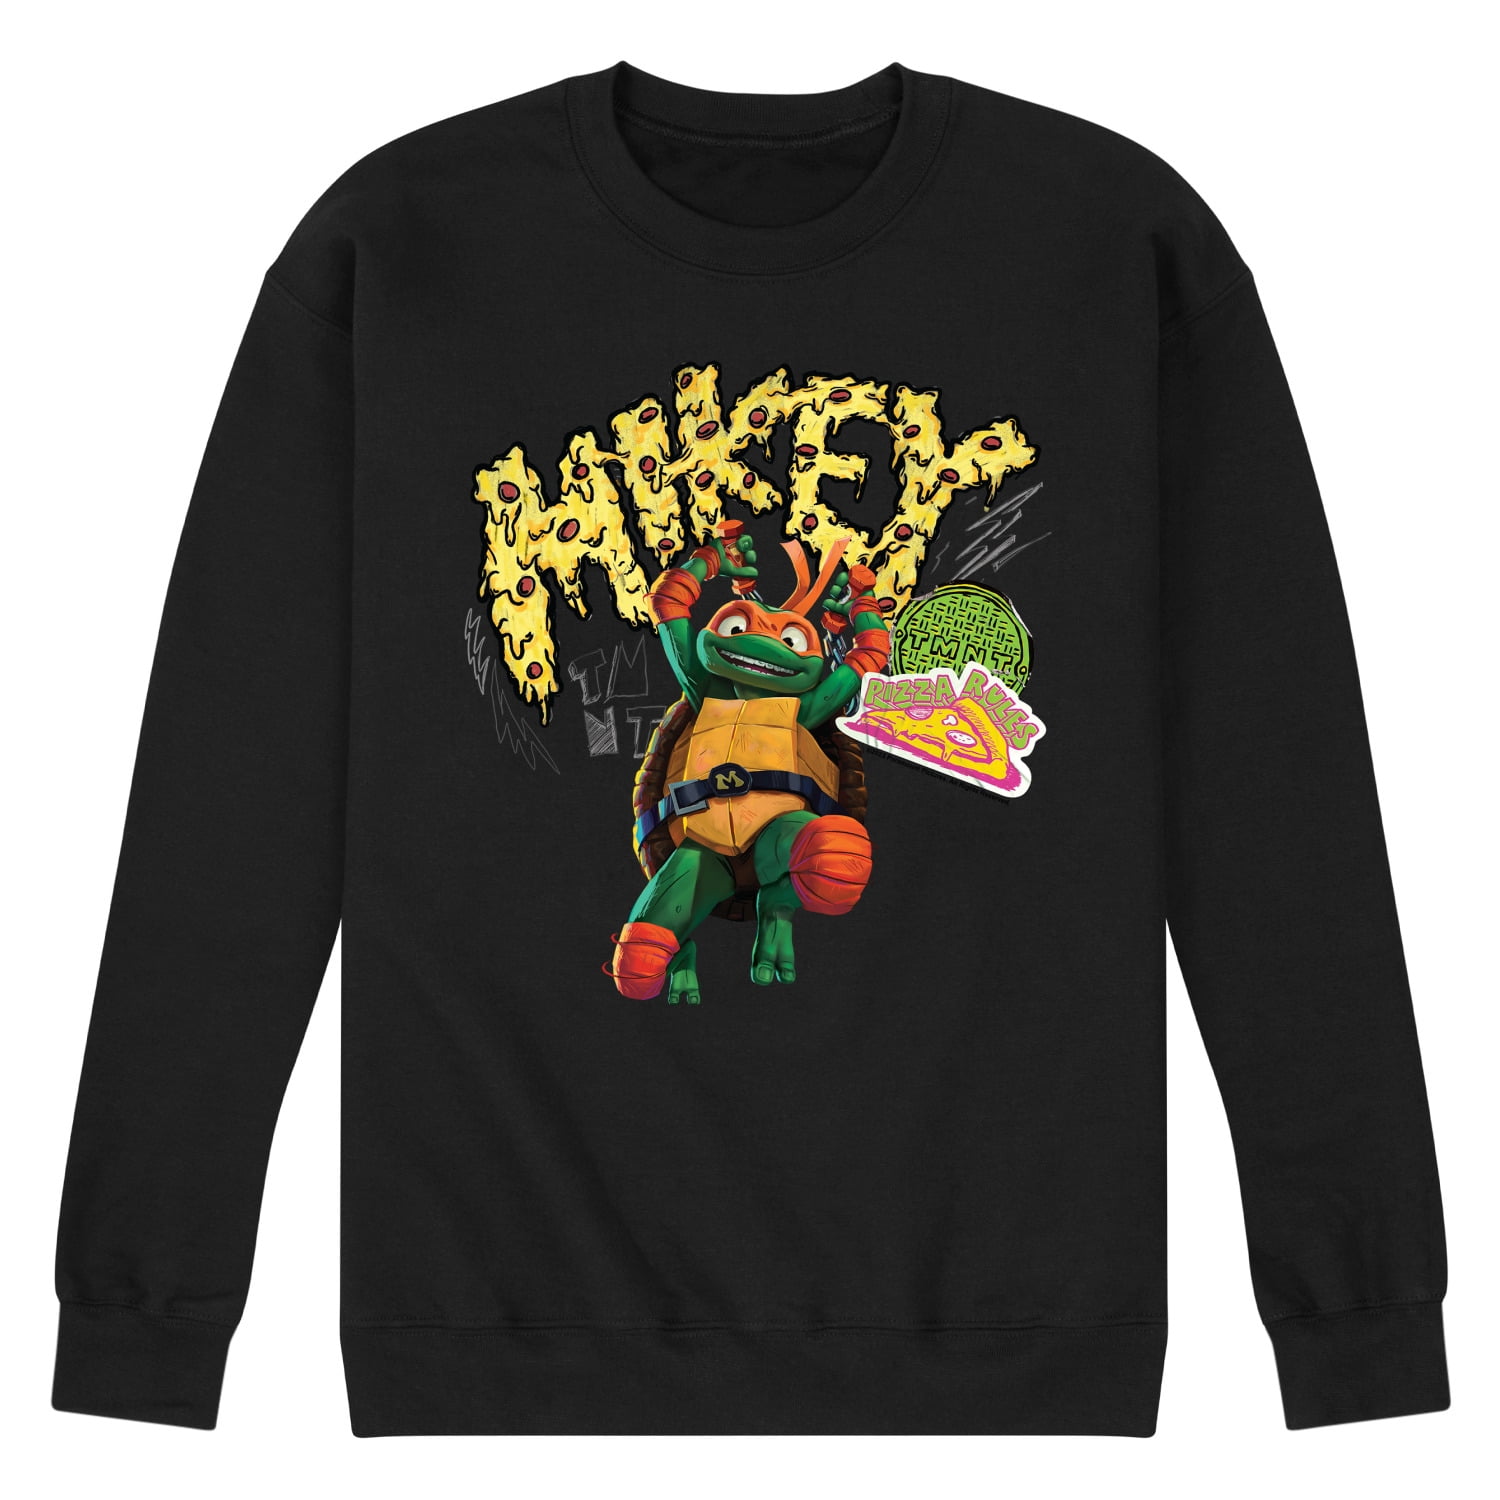 Teenage Mutant Ninja Turtles: Mutant Mayhem - Michelangelo AKA Mikey - Pizza Rules - Toddler and Youth Crewneck Fleece Sweatshirt, Toddler Boy's, Size